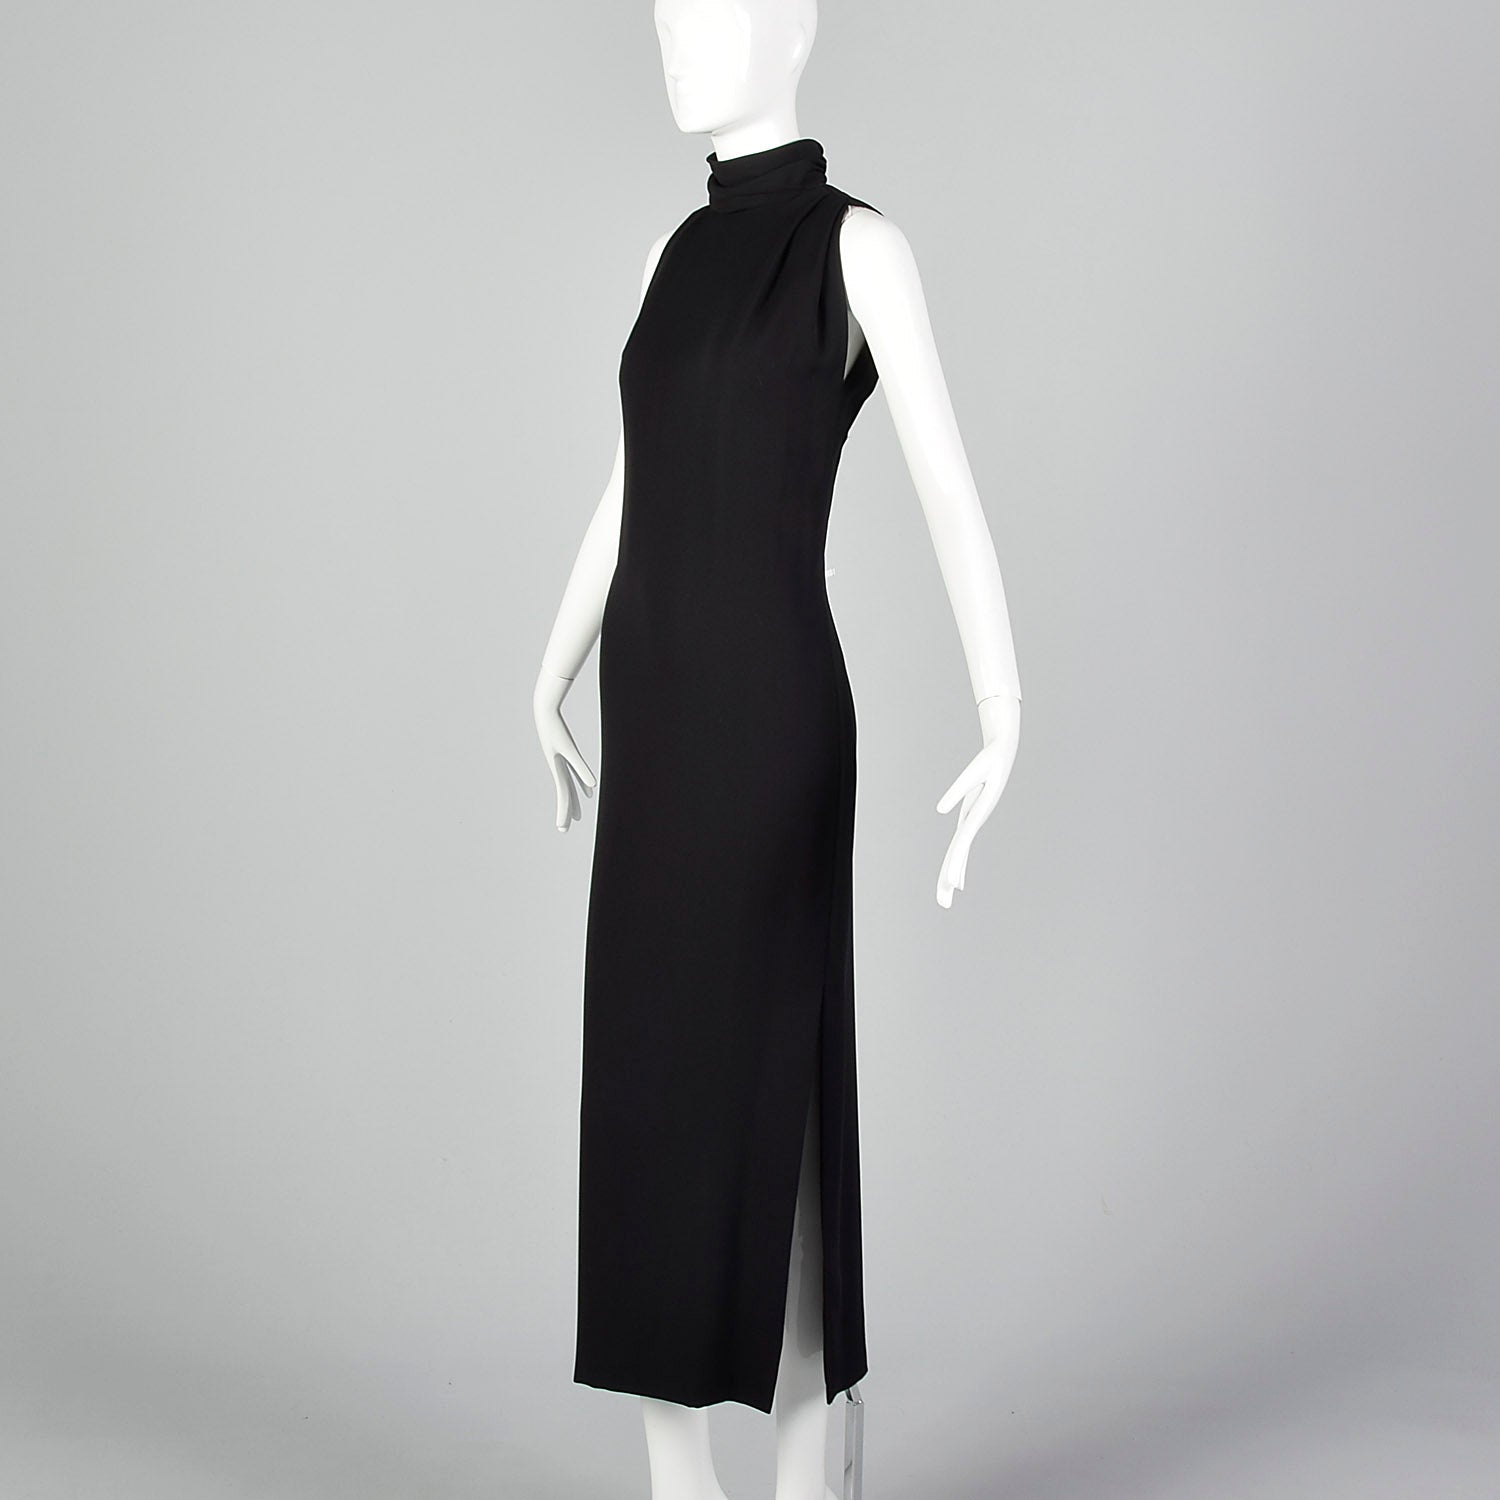 Small Galanos Late 1970s Minimalist Black Pencil Dress